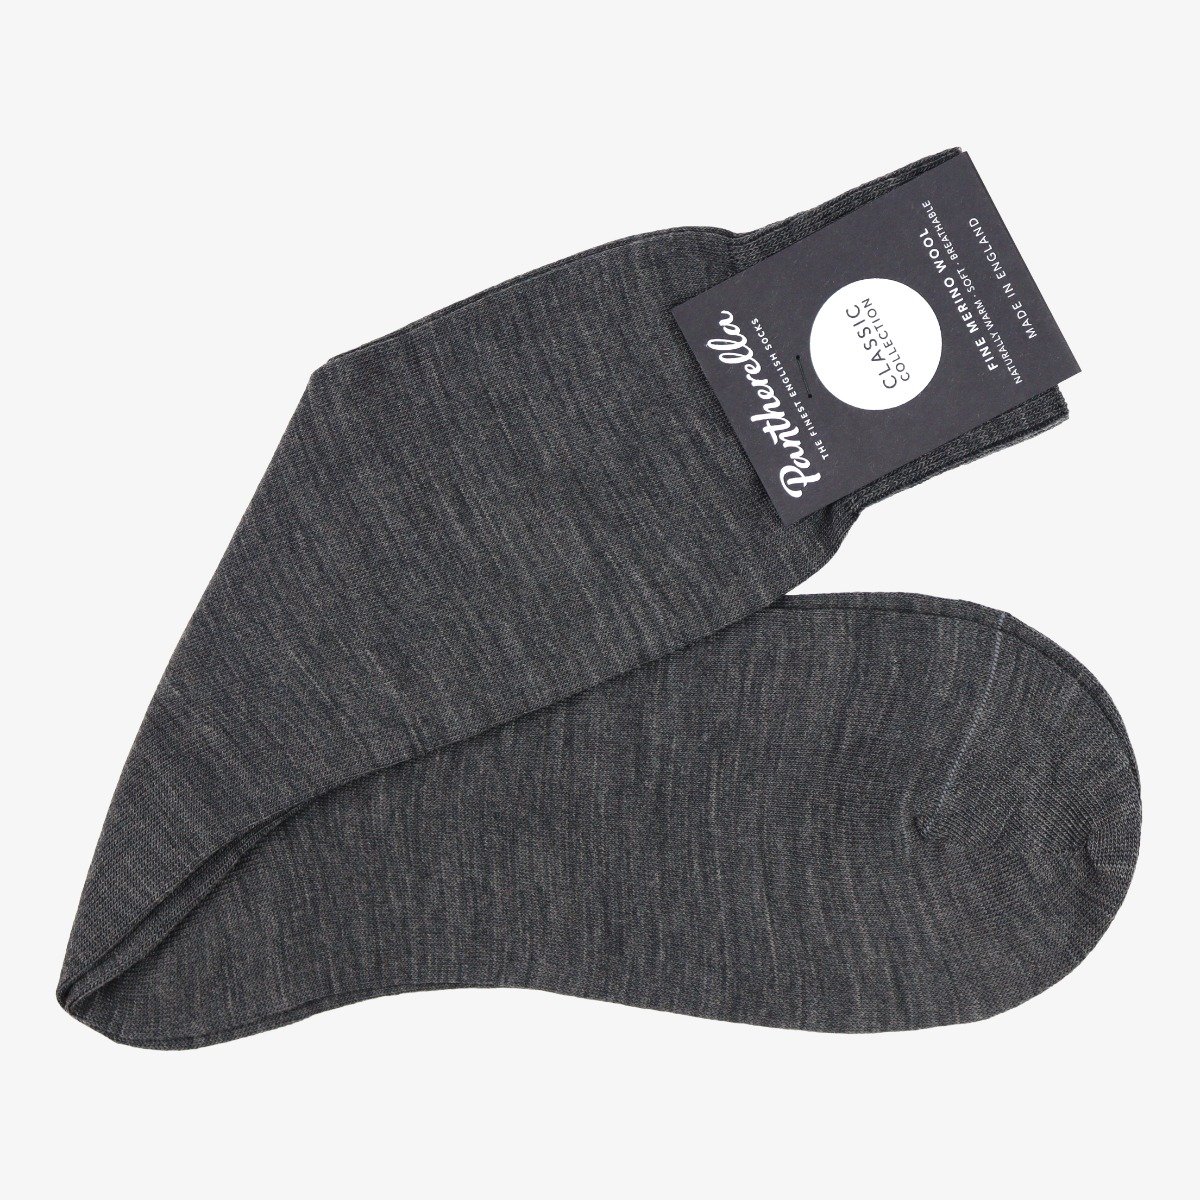 Pantherella Camden dark grey merino wool mid calf socks